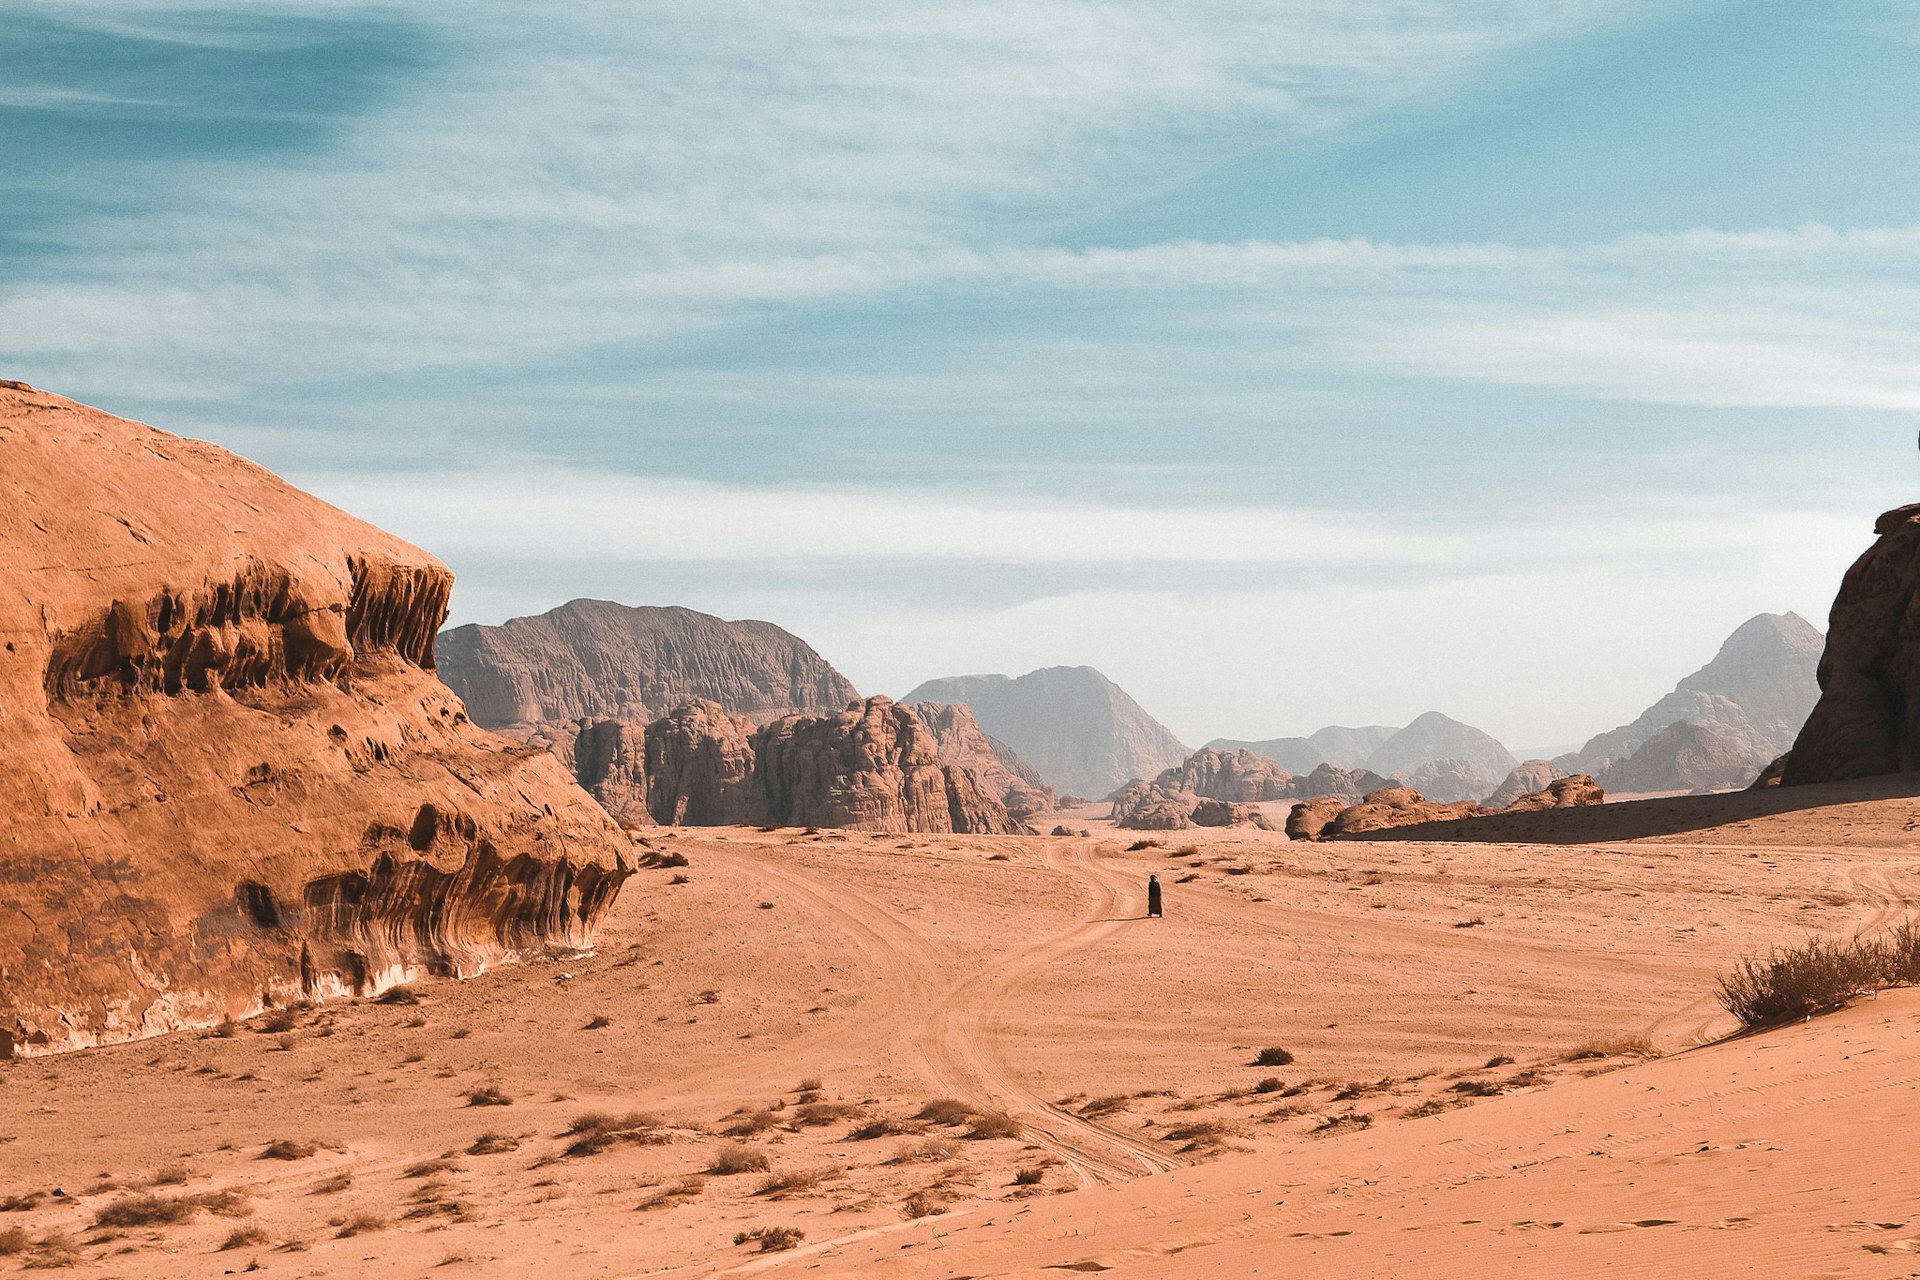 A human figure in a desert landscape